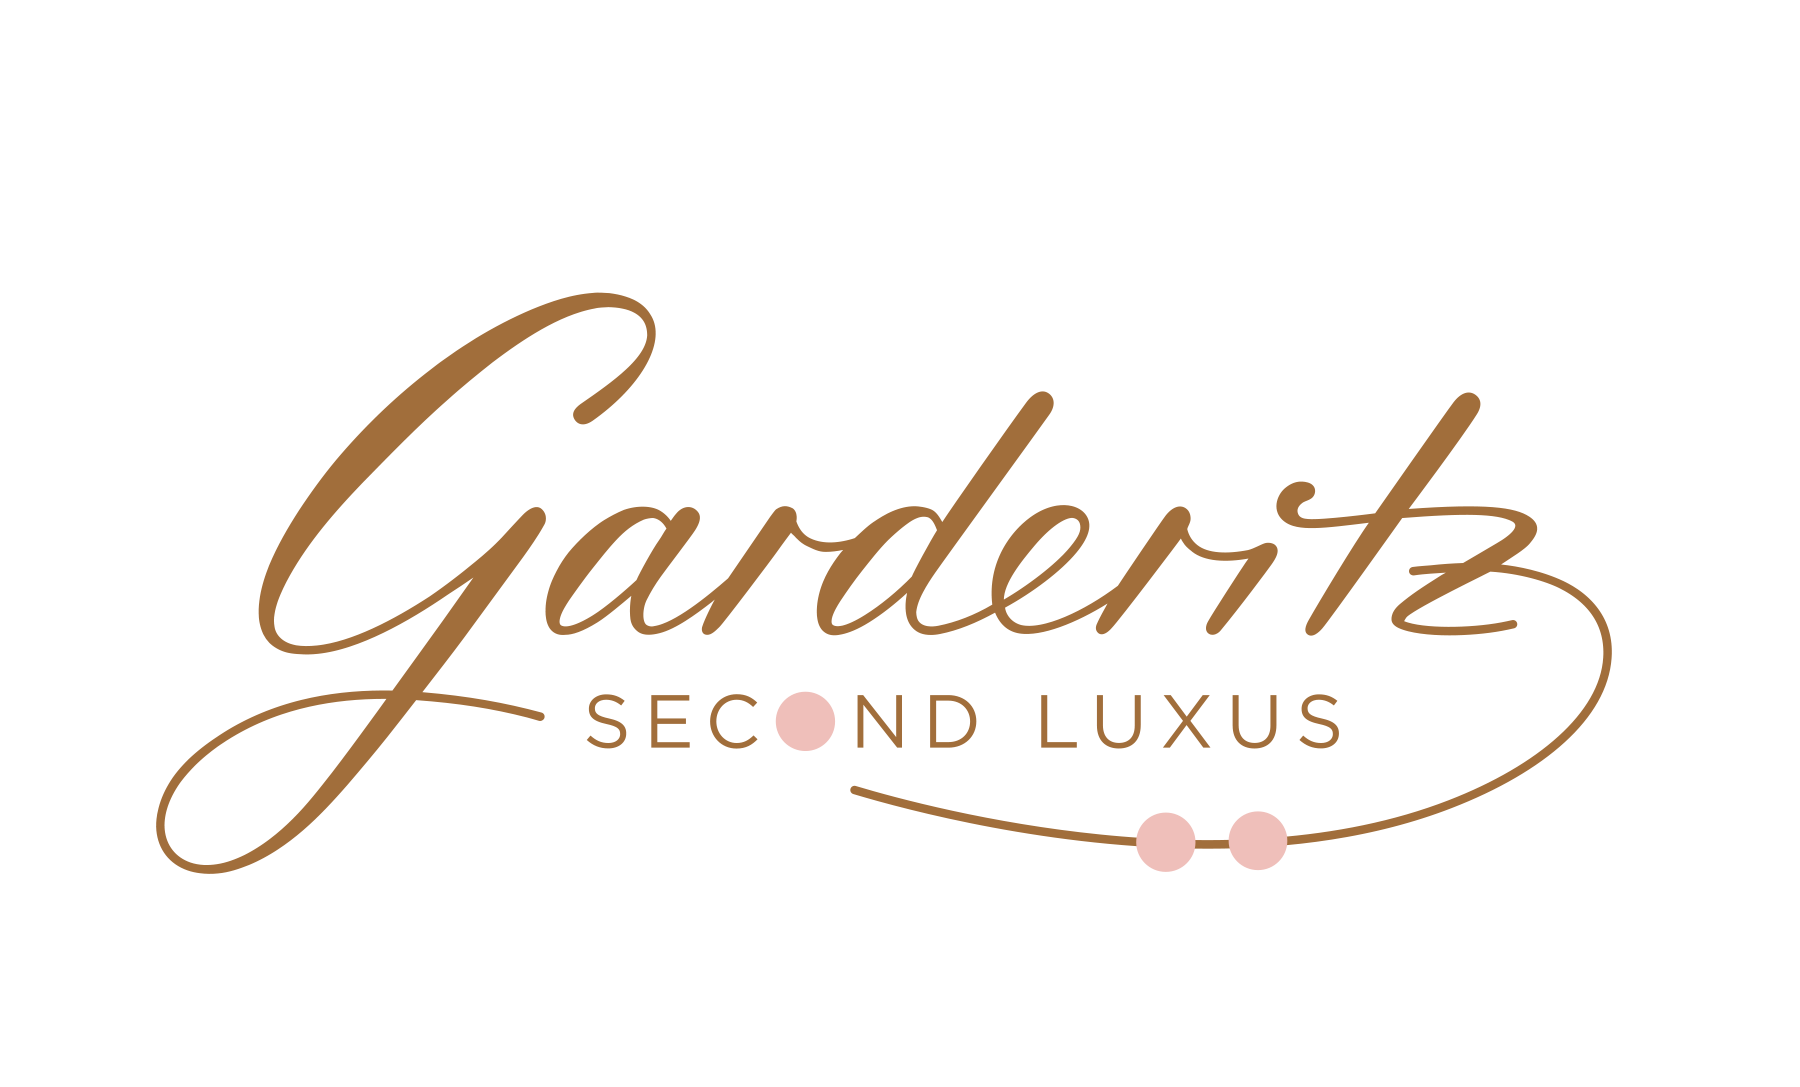 Garderitz - Second Luxus